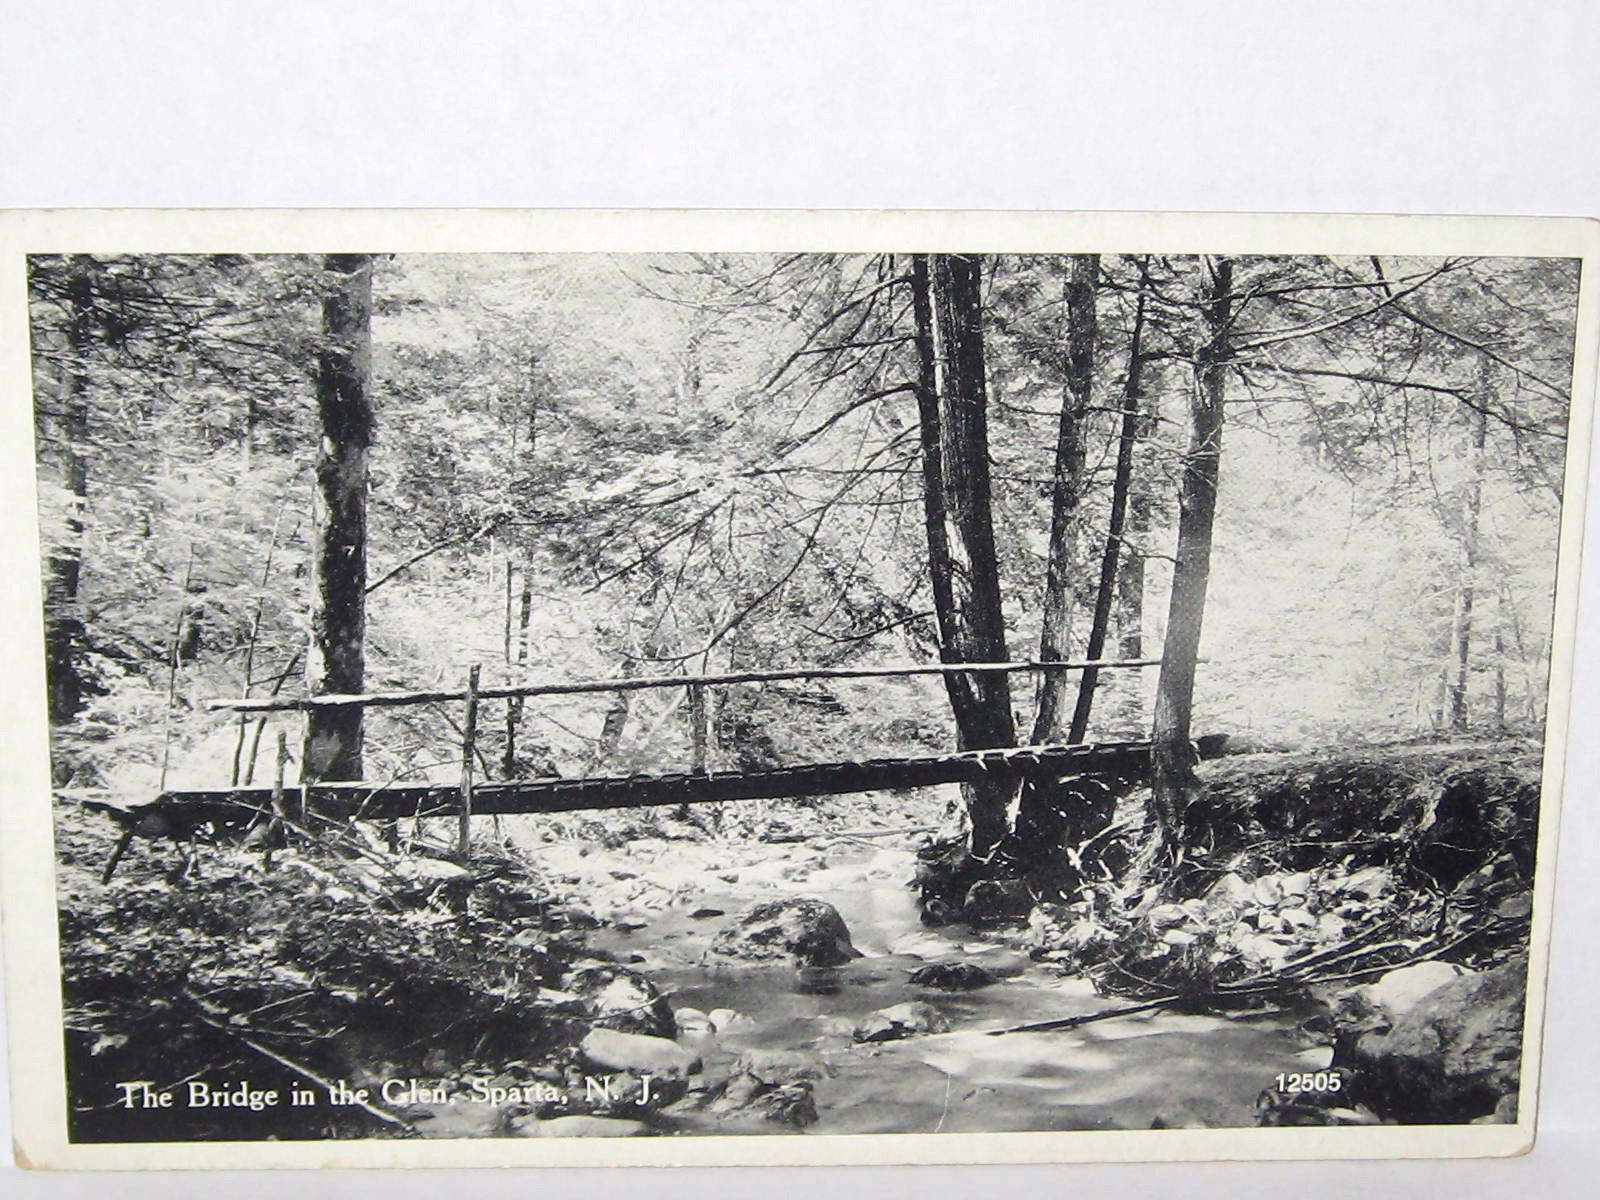 SPART - A BRIDGE IN THE GLEM - C 1910